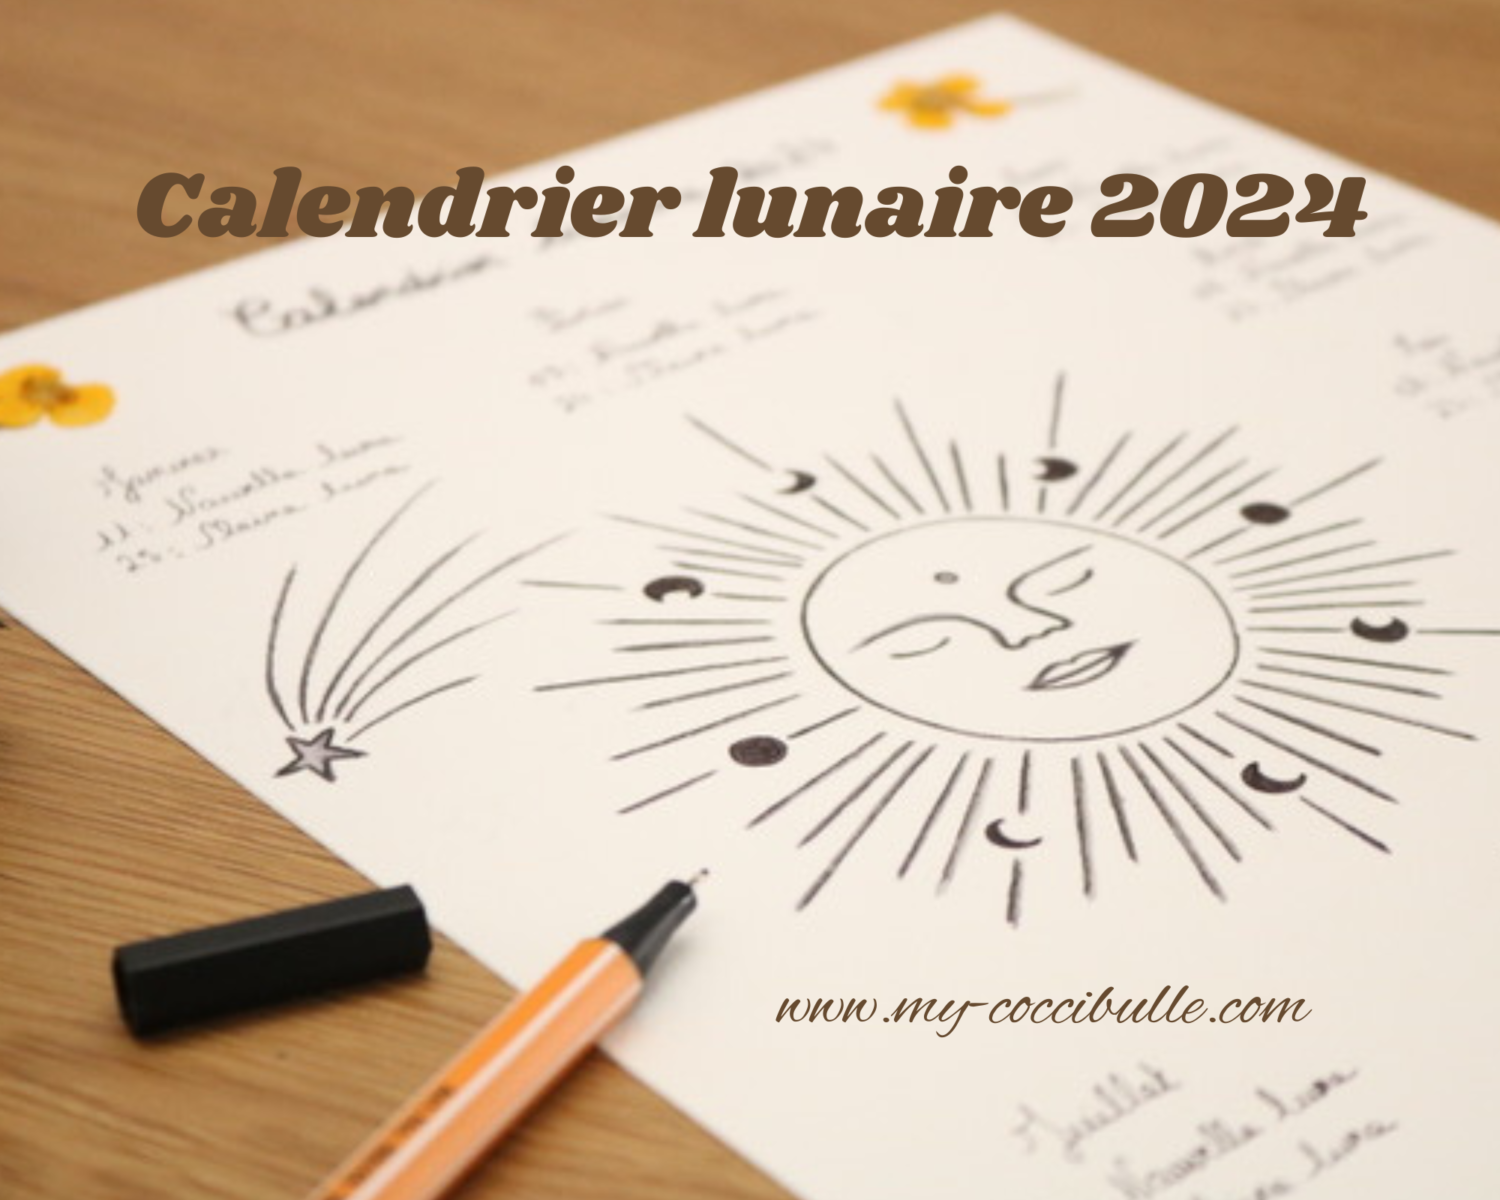 DIY Calendrier lunaire 2024 - My Coccibulle